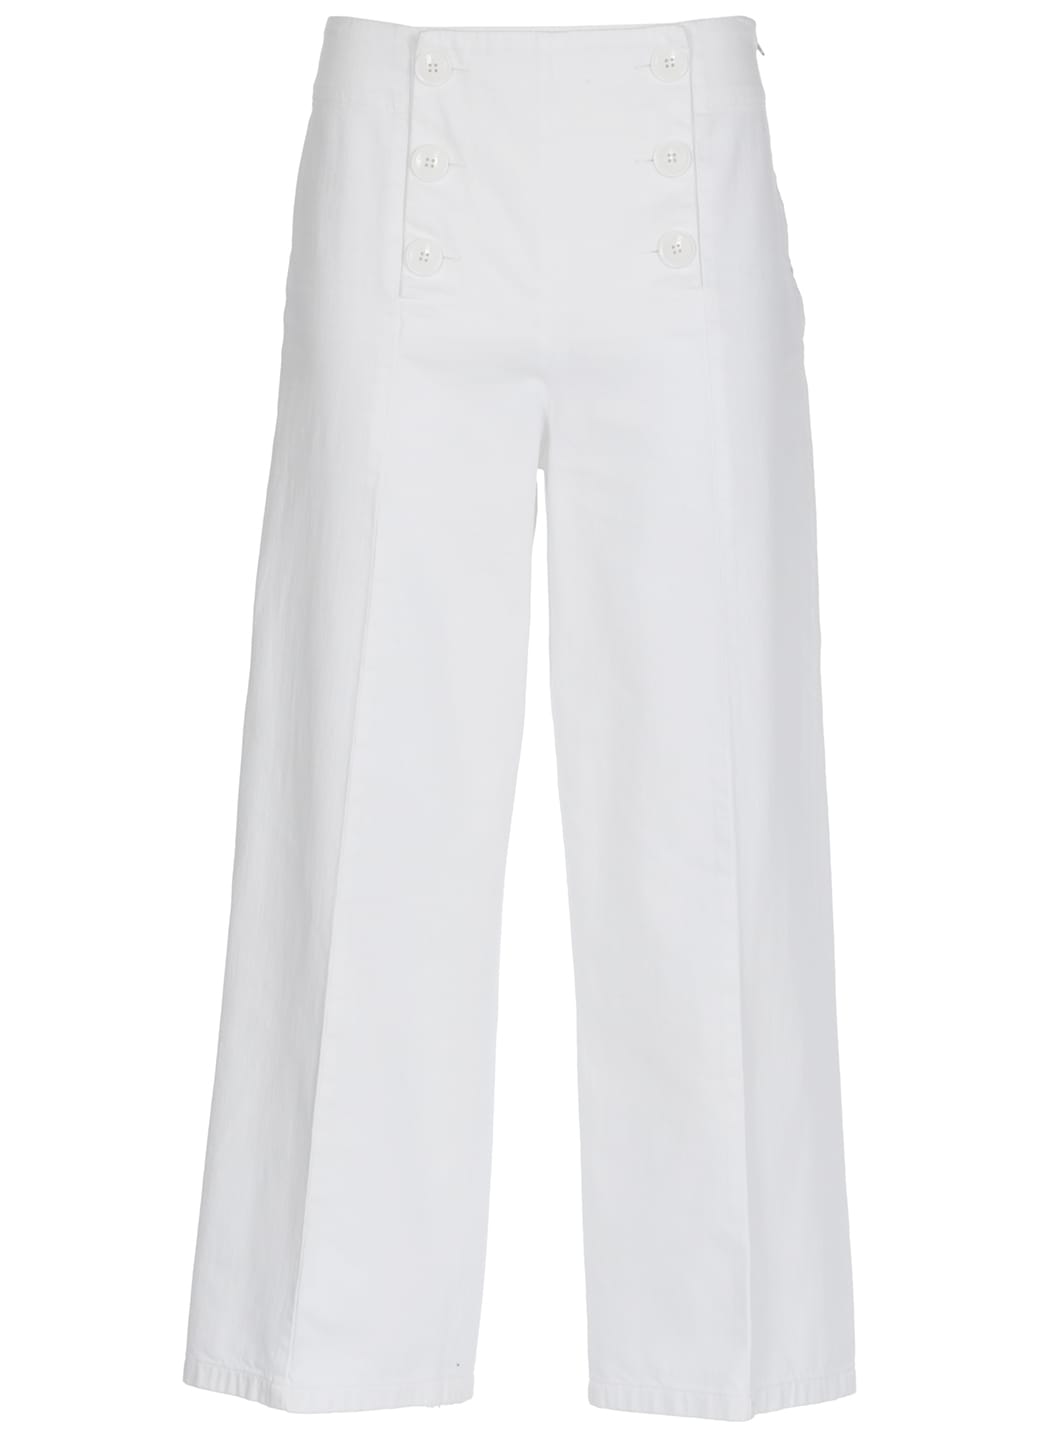 Boutique Moschino Denim Sailor Trousers